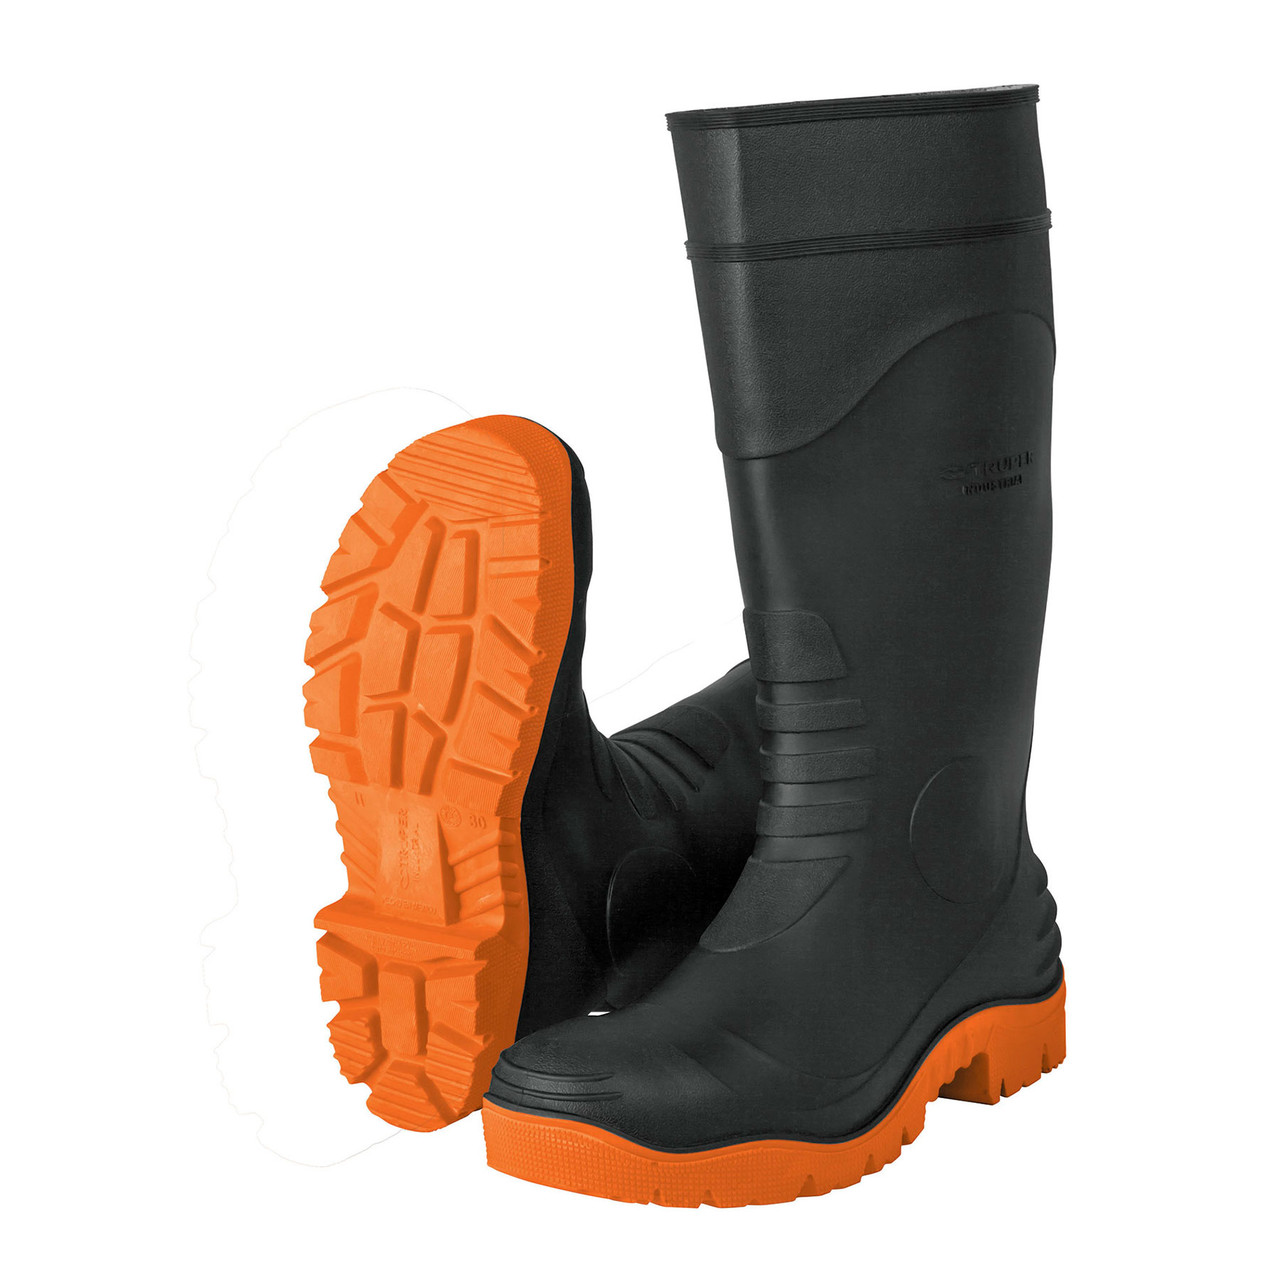 Truper Industrial Black Rubber Boots 9 #17913